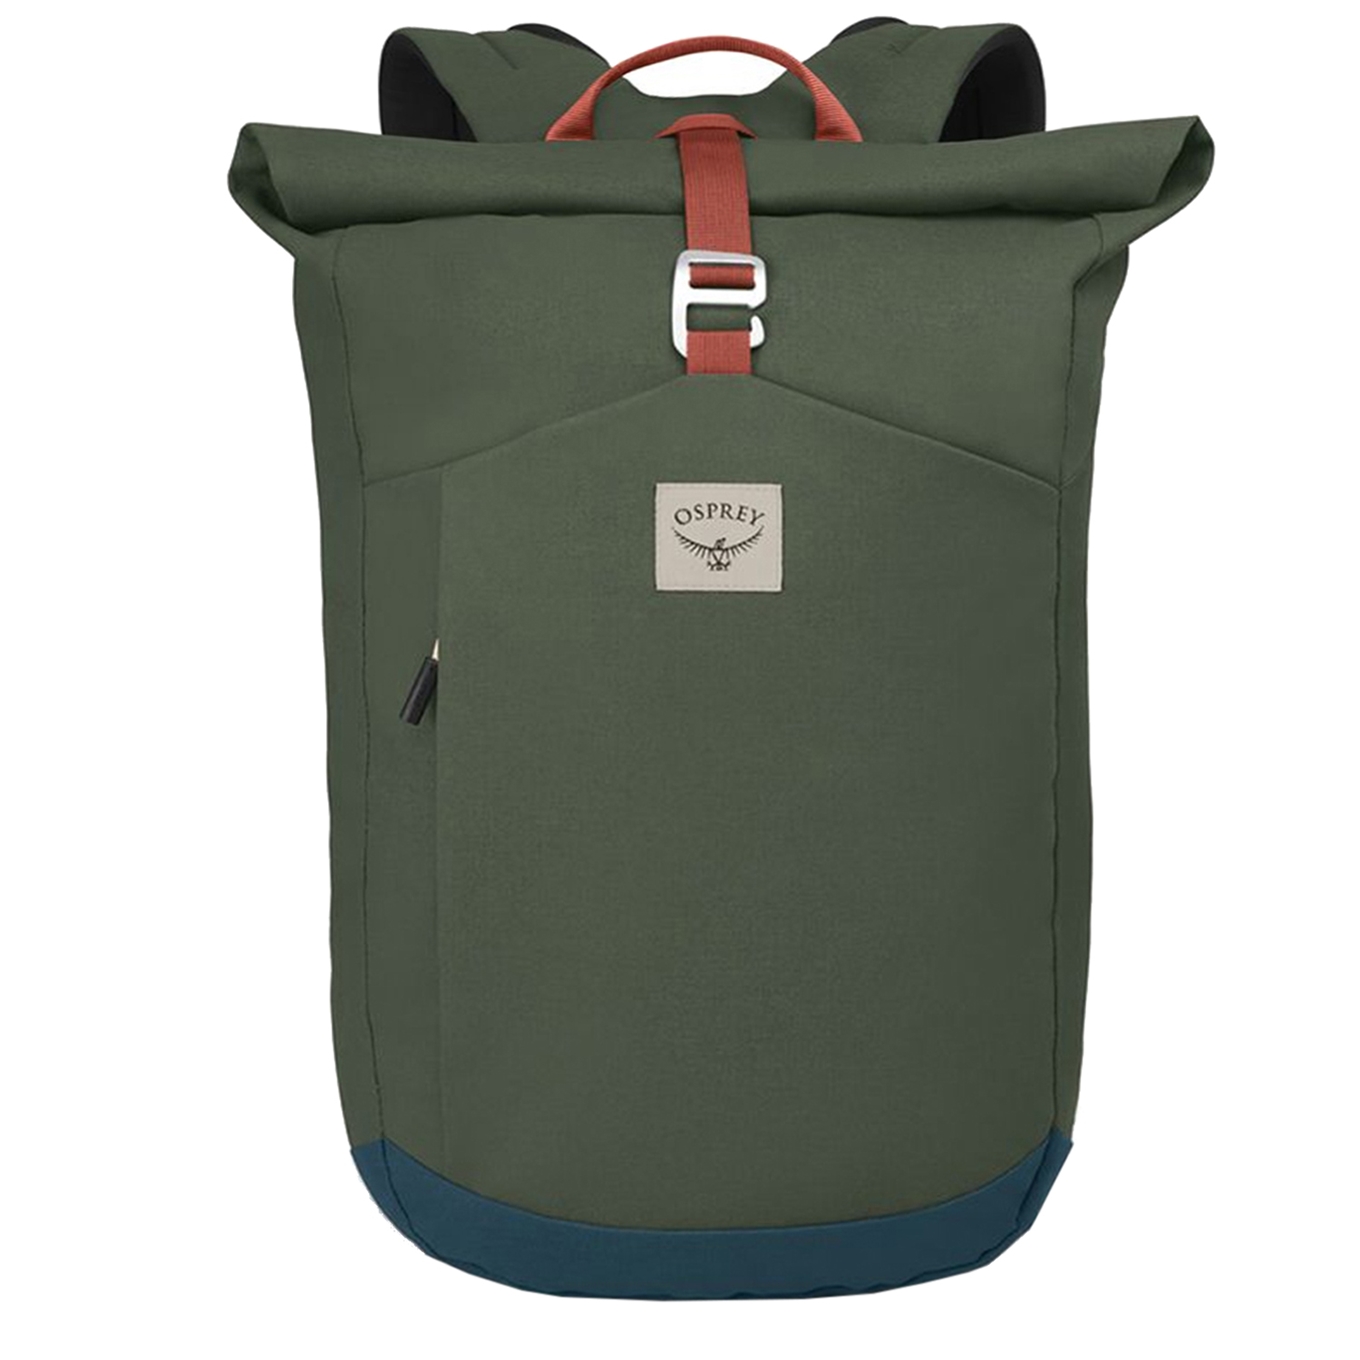 Osprey Arcane Roll Top haybale green/stargazer blue backpack